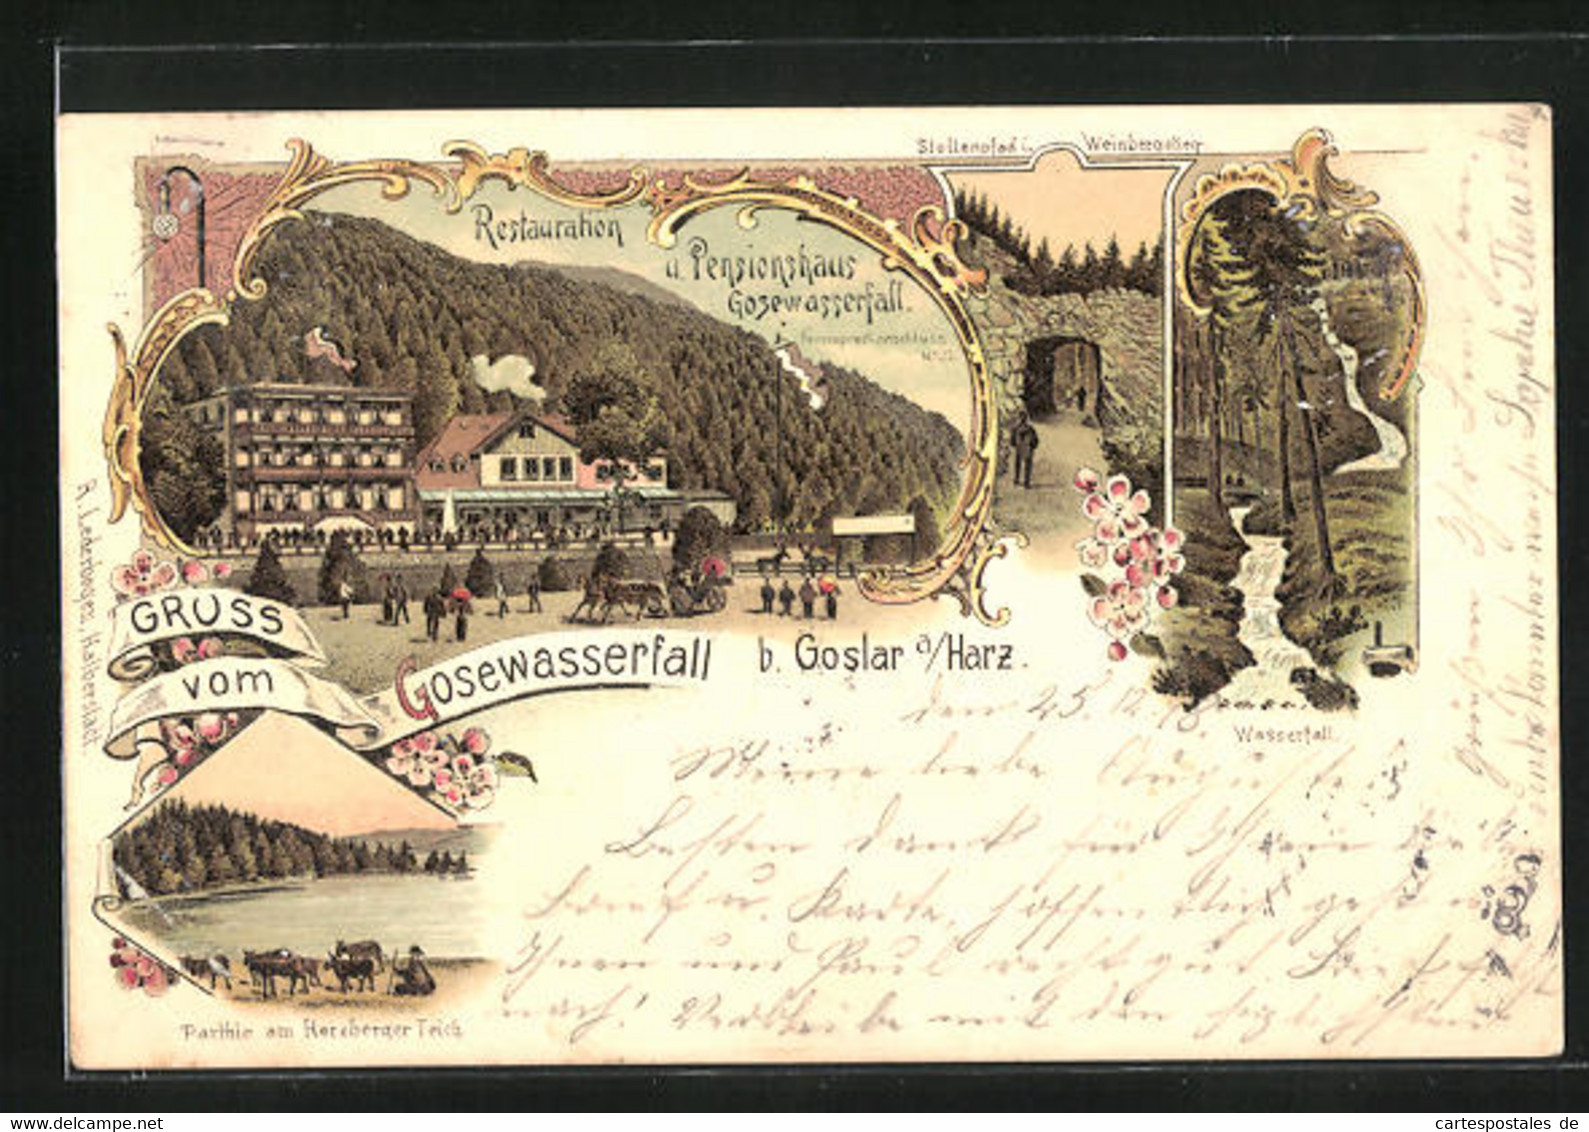 Lithographie Goslar / Harz, Restaurant-Pension Gosewasserfall, Stollenpfad, Herzberger Teich - Herzberg